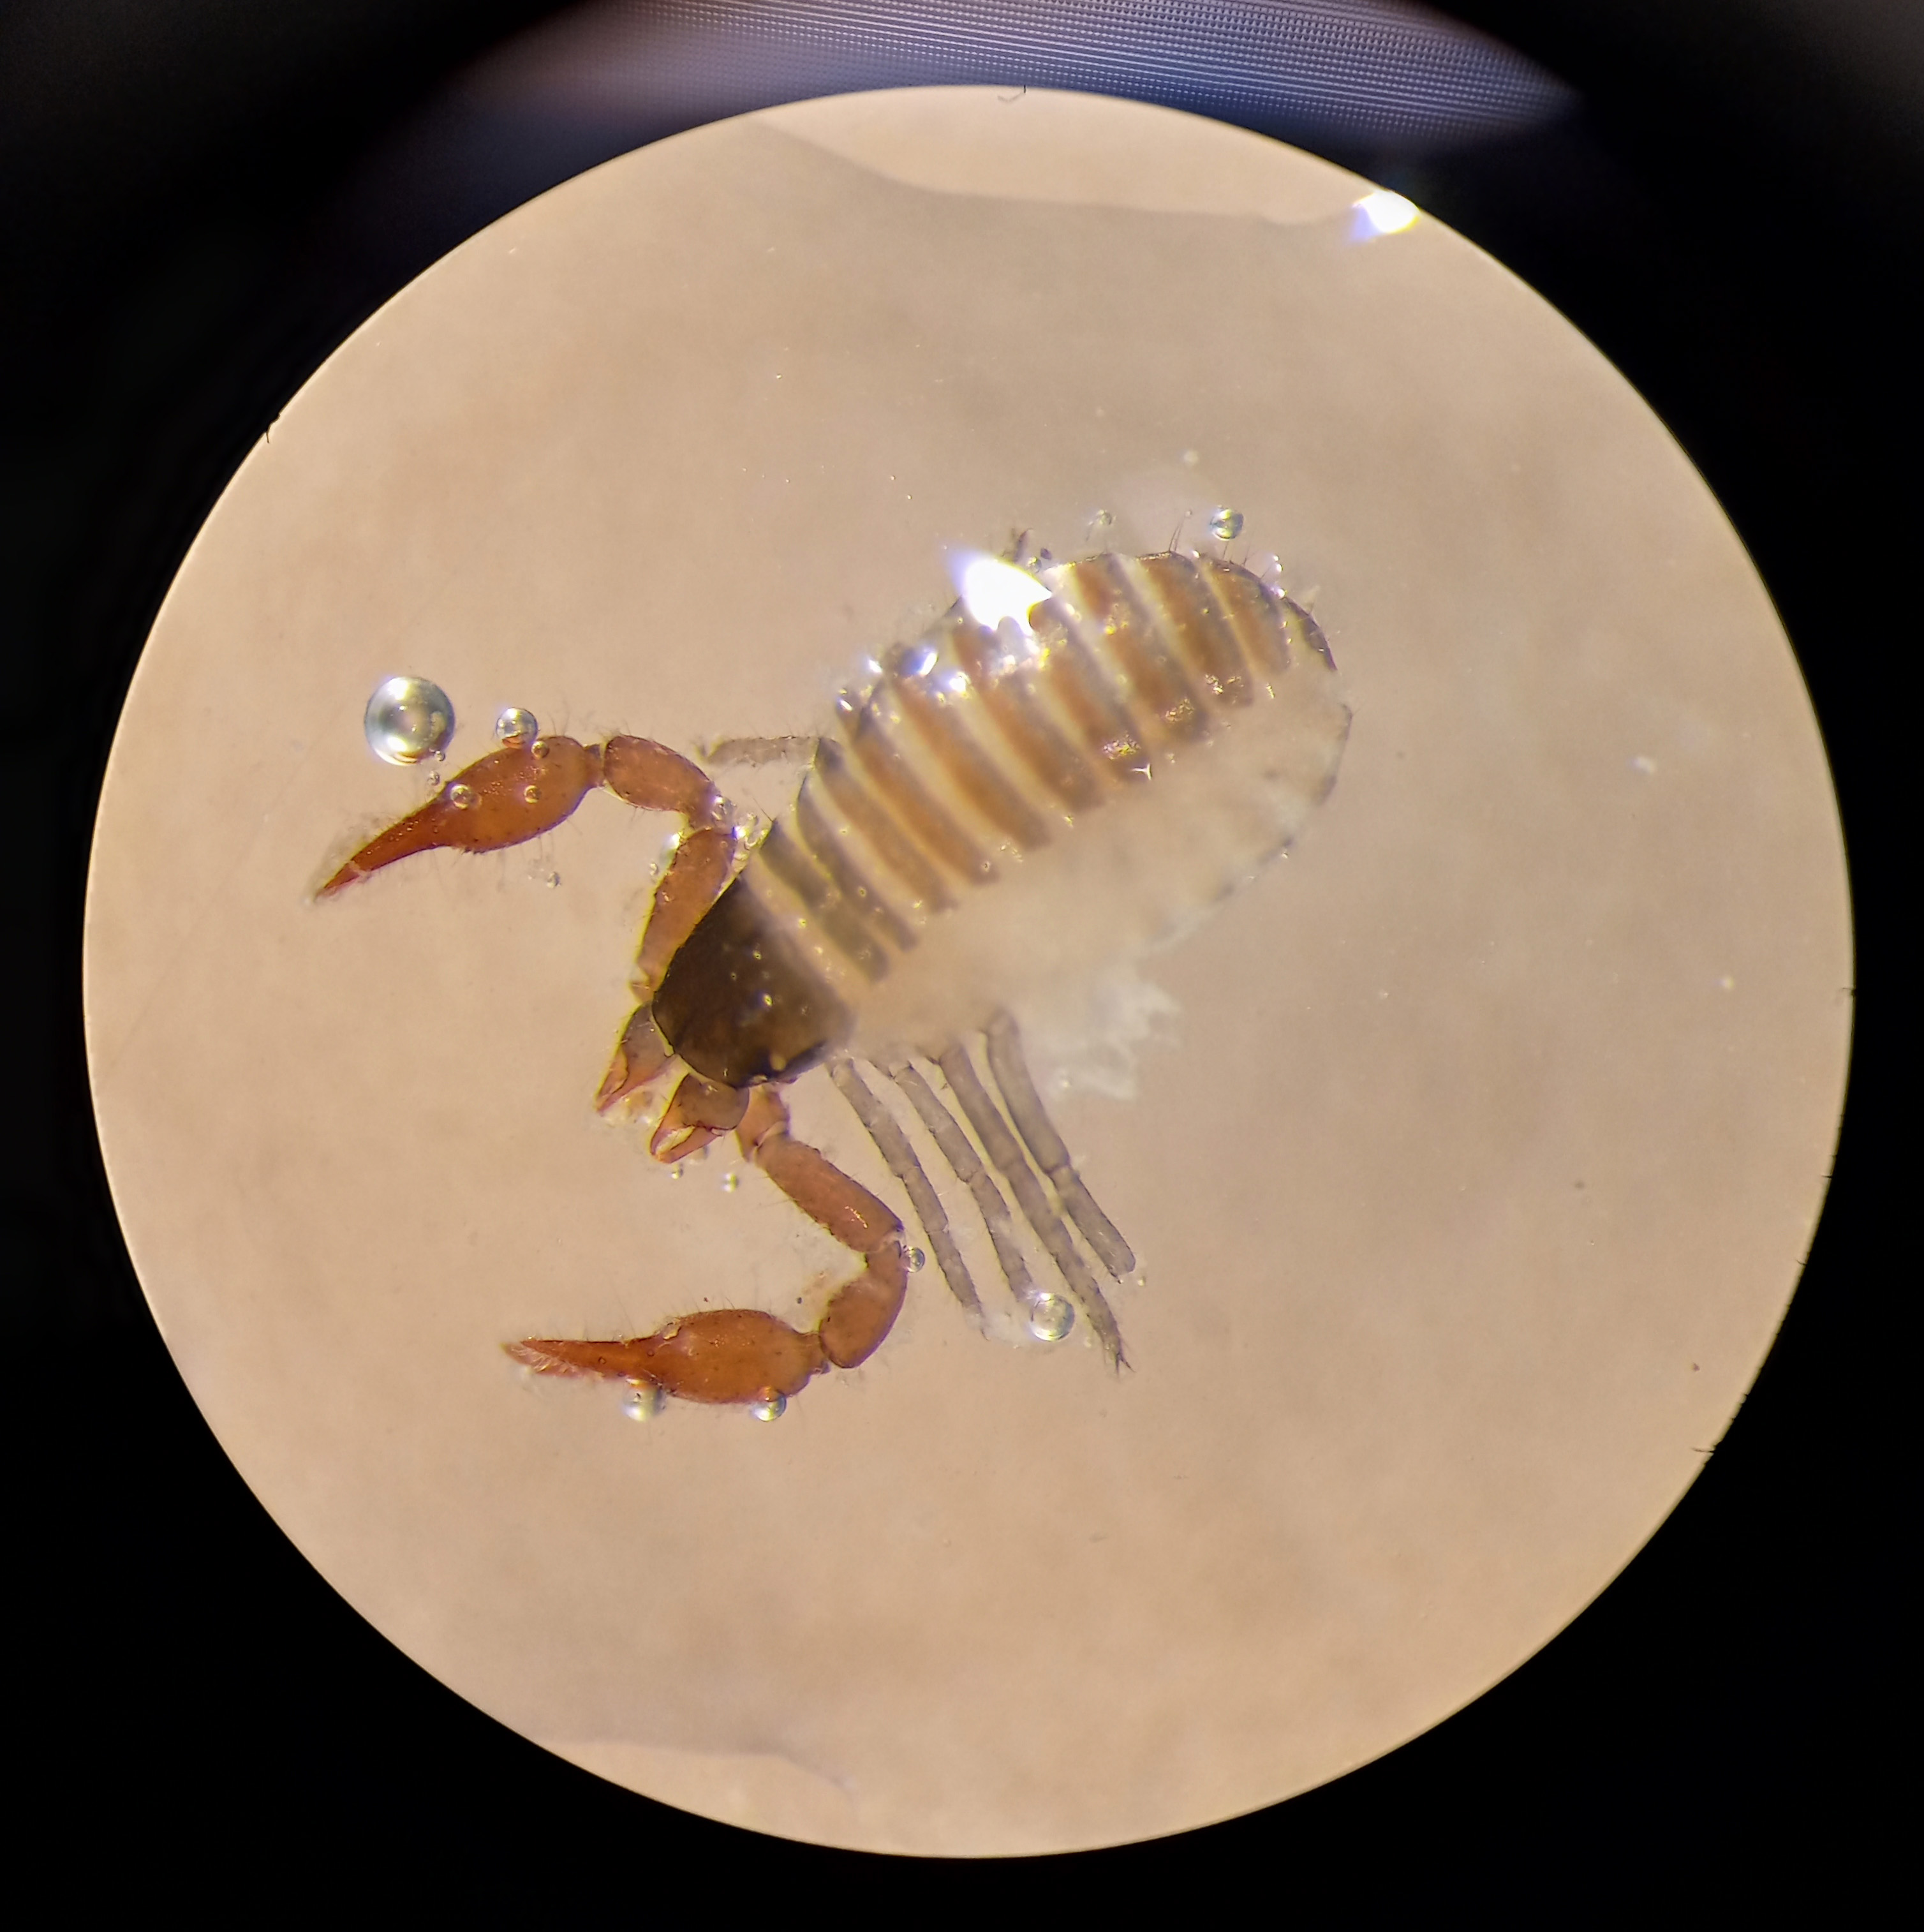 A pseudoscorpion was among the samples of invertebrates found at Kenai Peninsula sites.